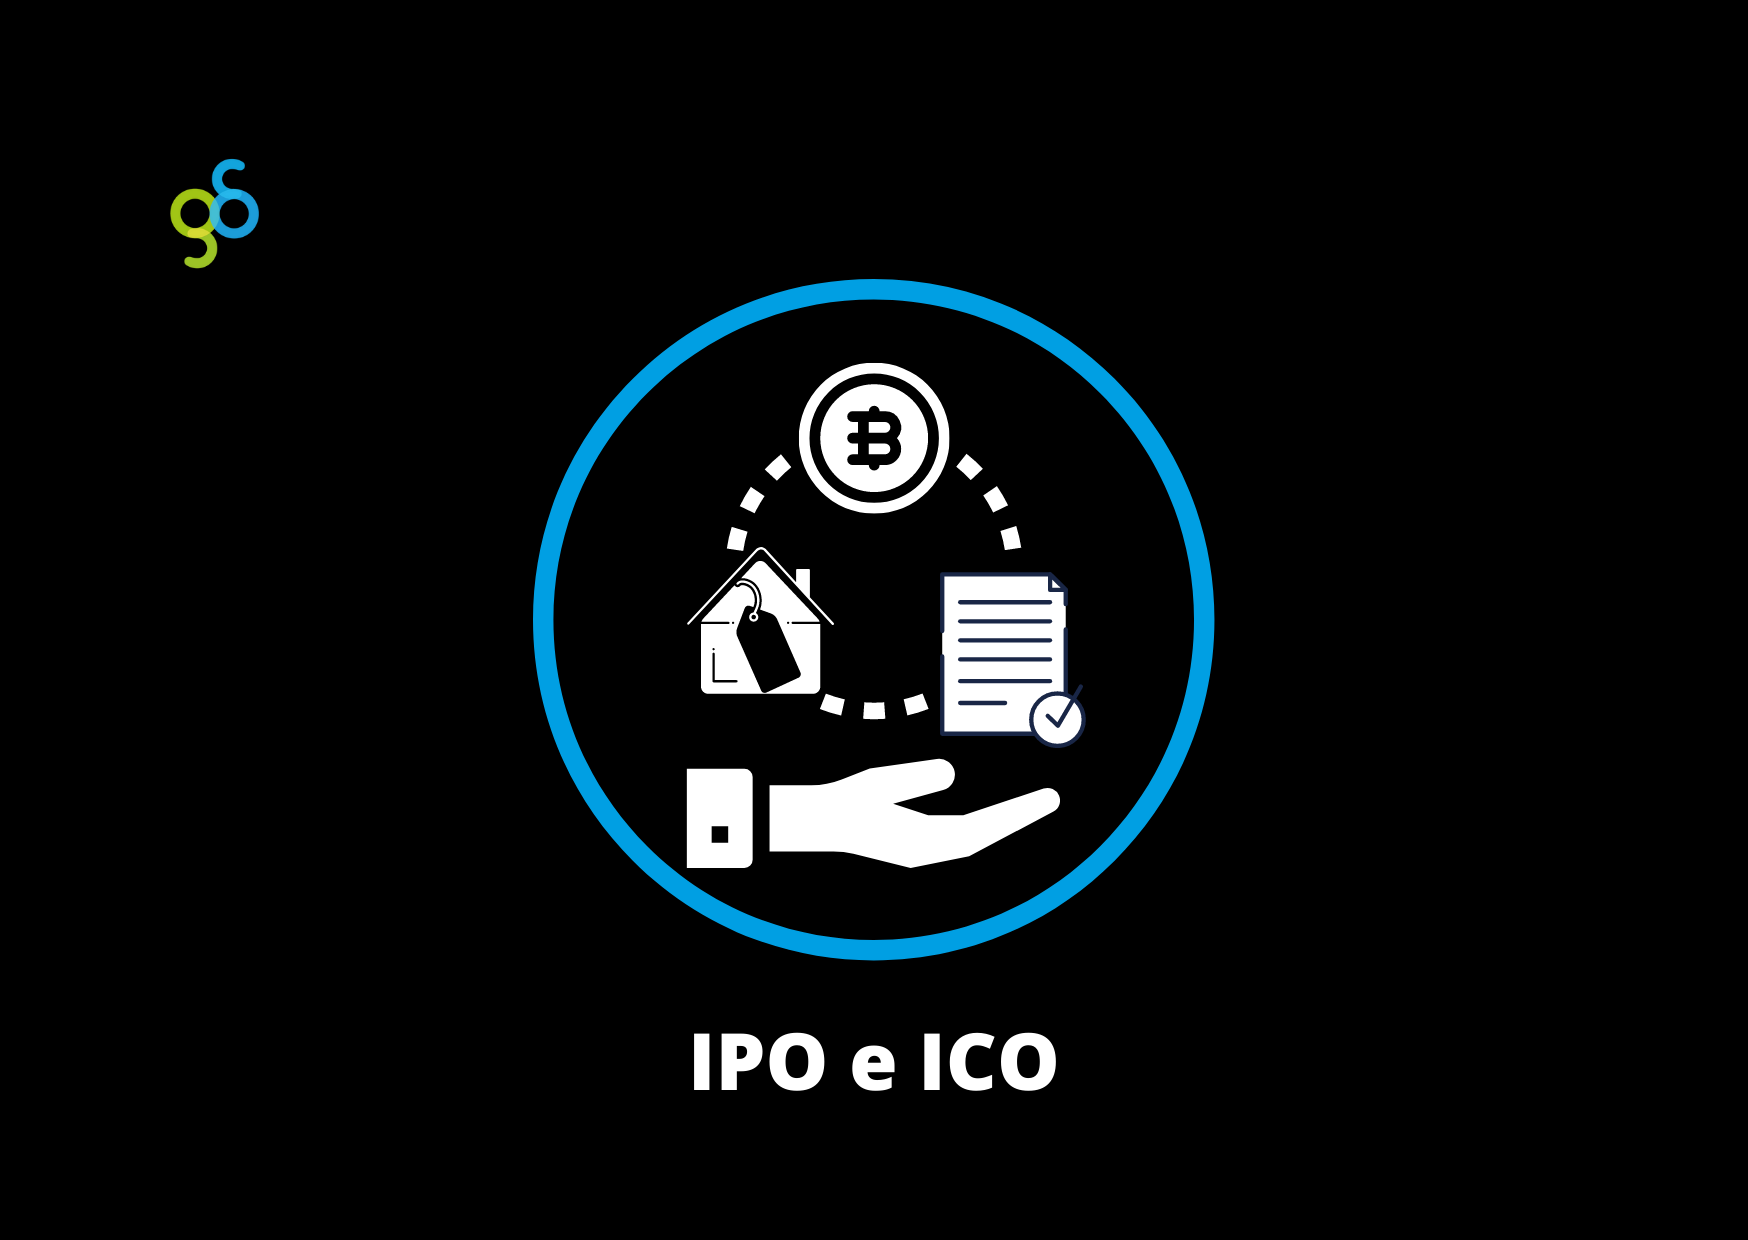 IPO e ICO